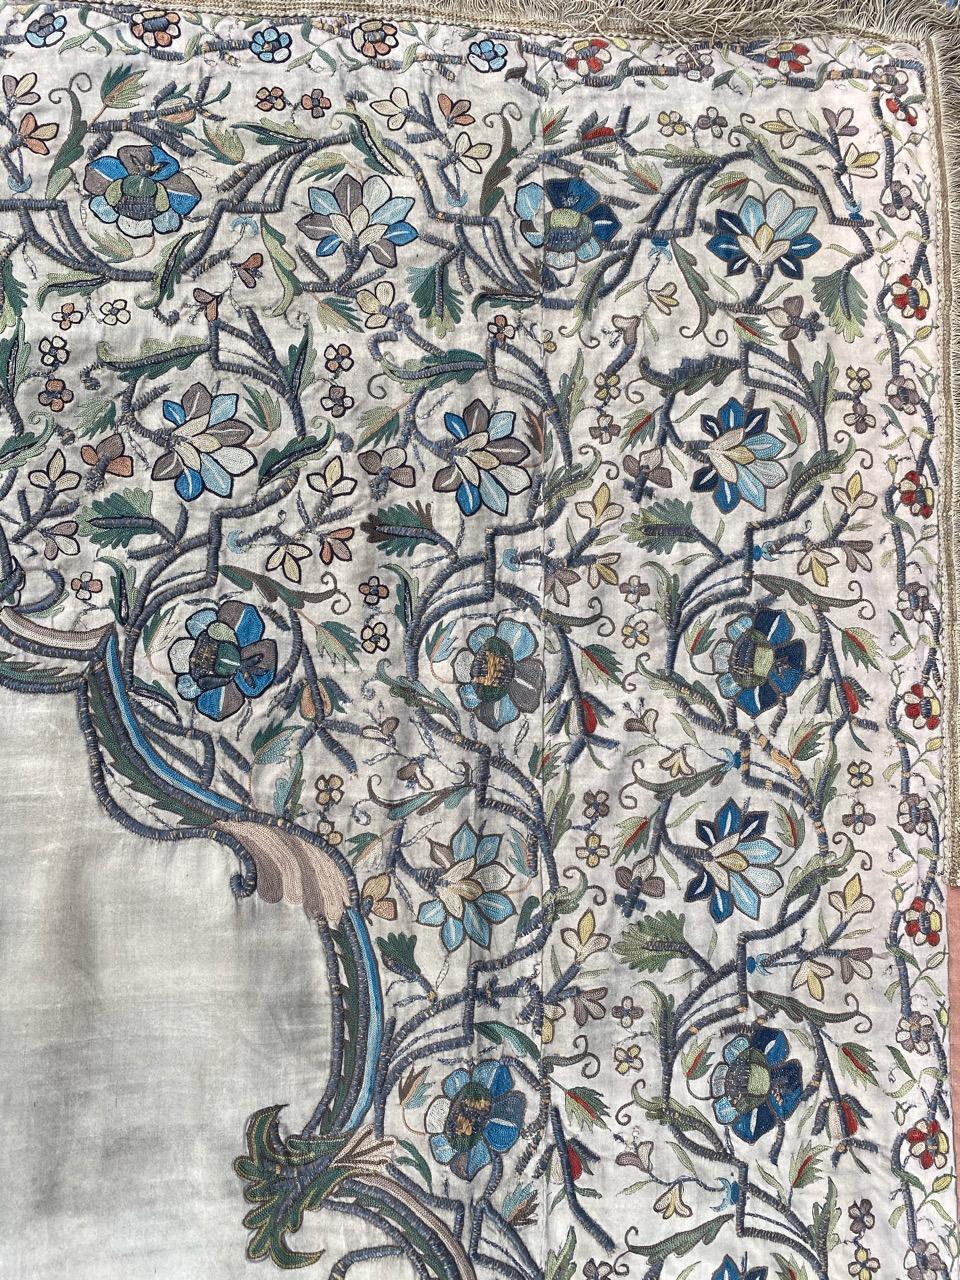 Bobyrug’s Wonderful Antique Turkish Ottoman Embroidery 1